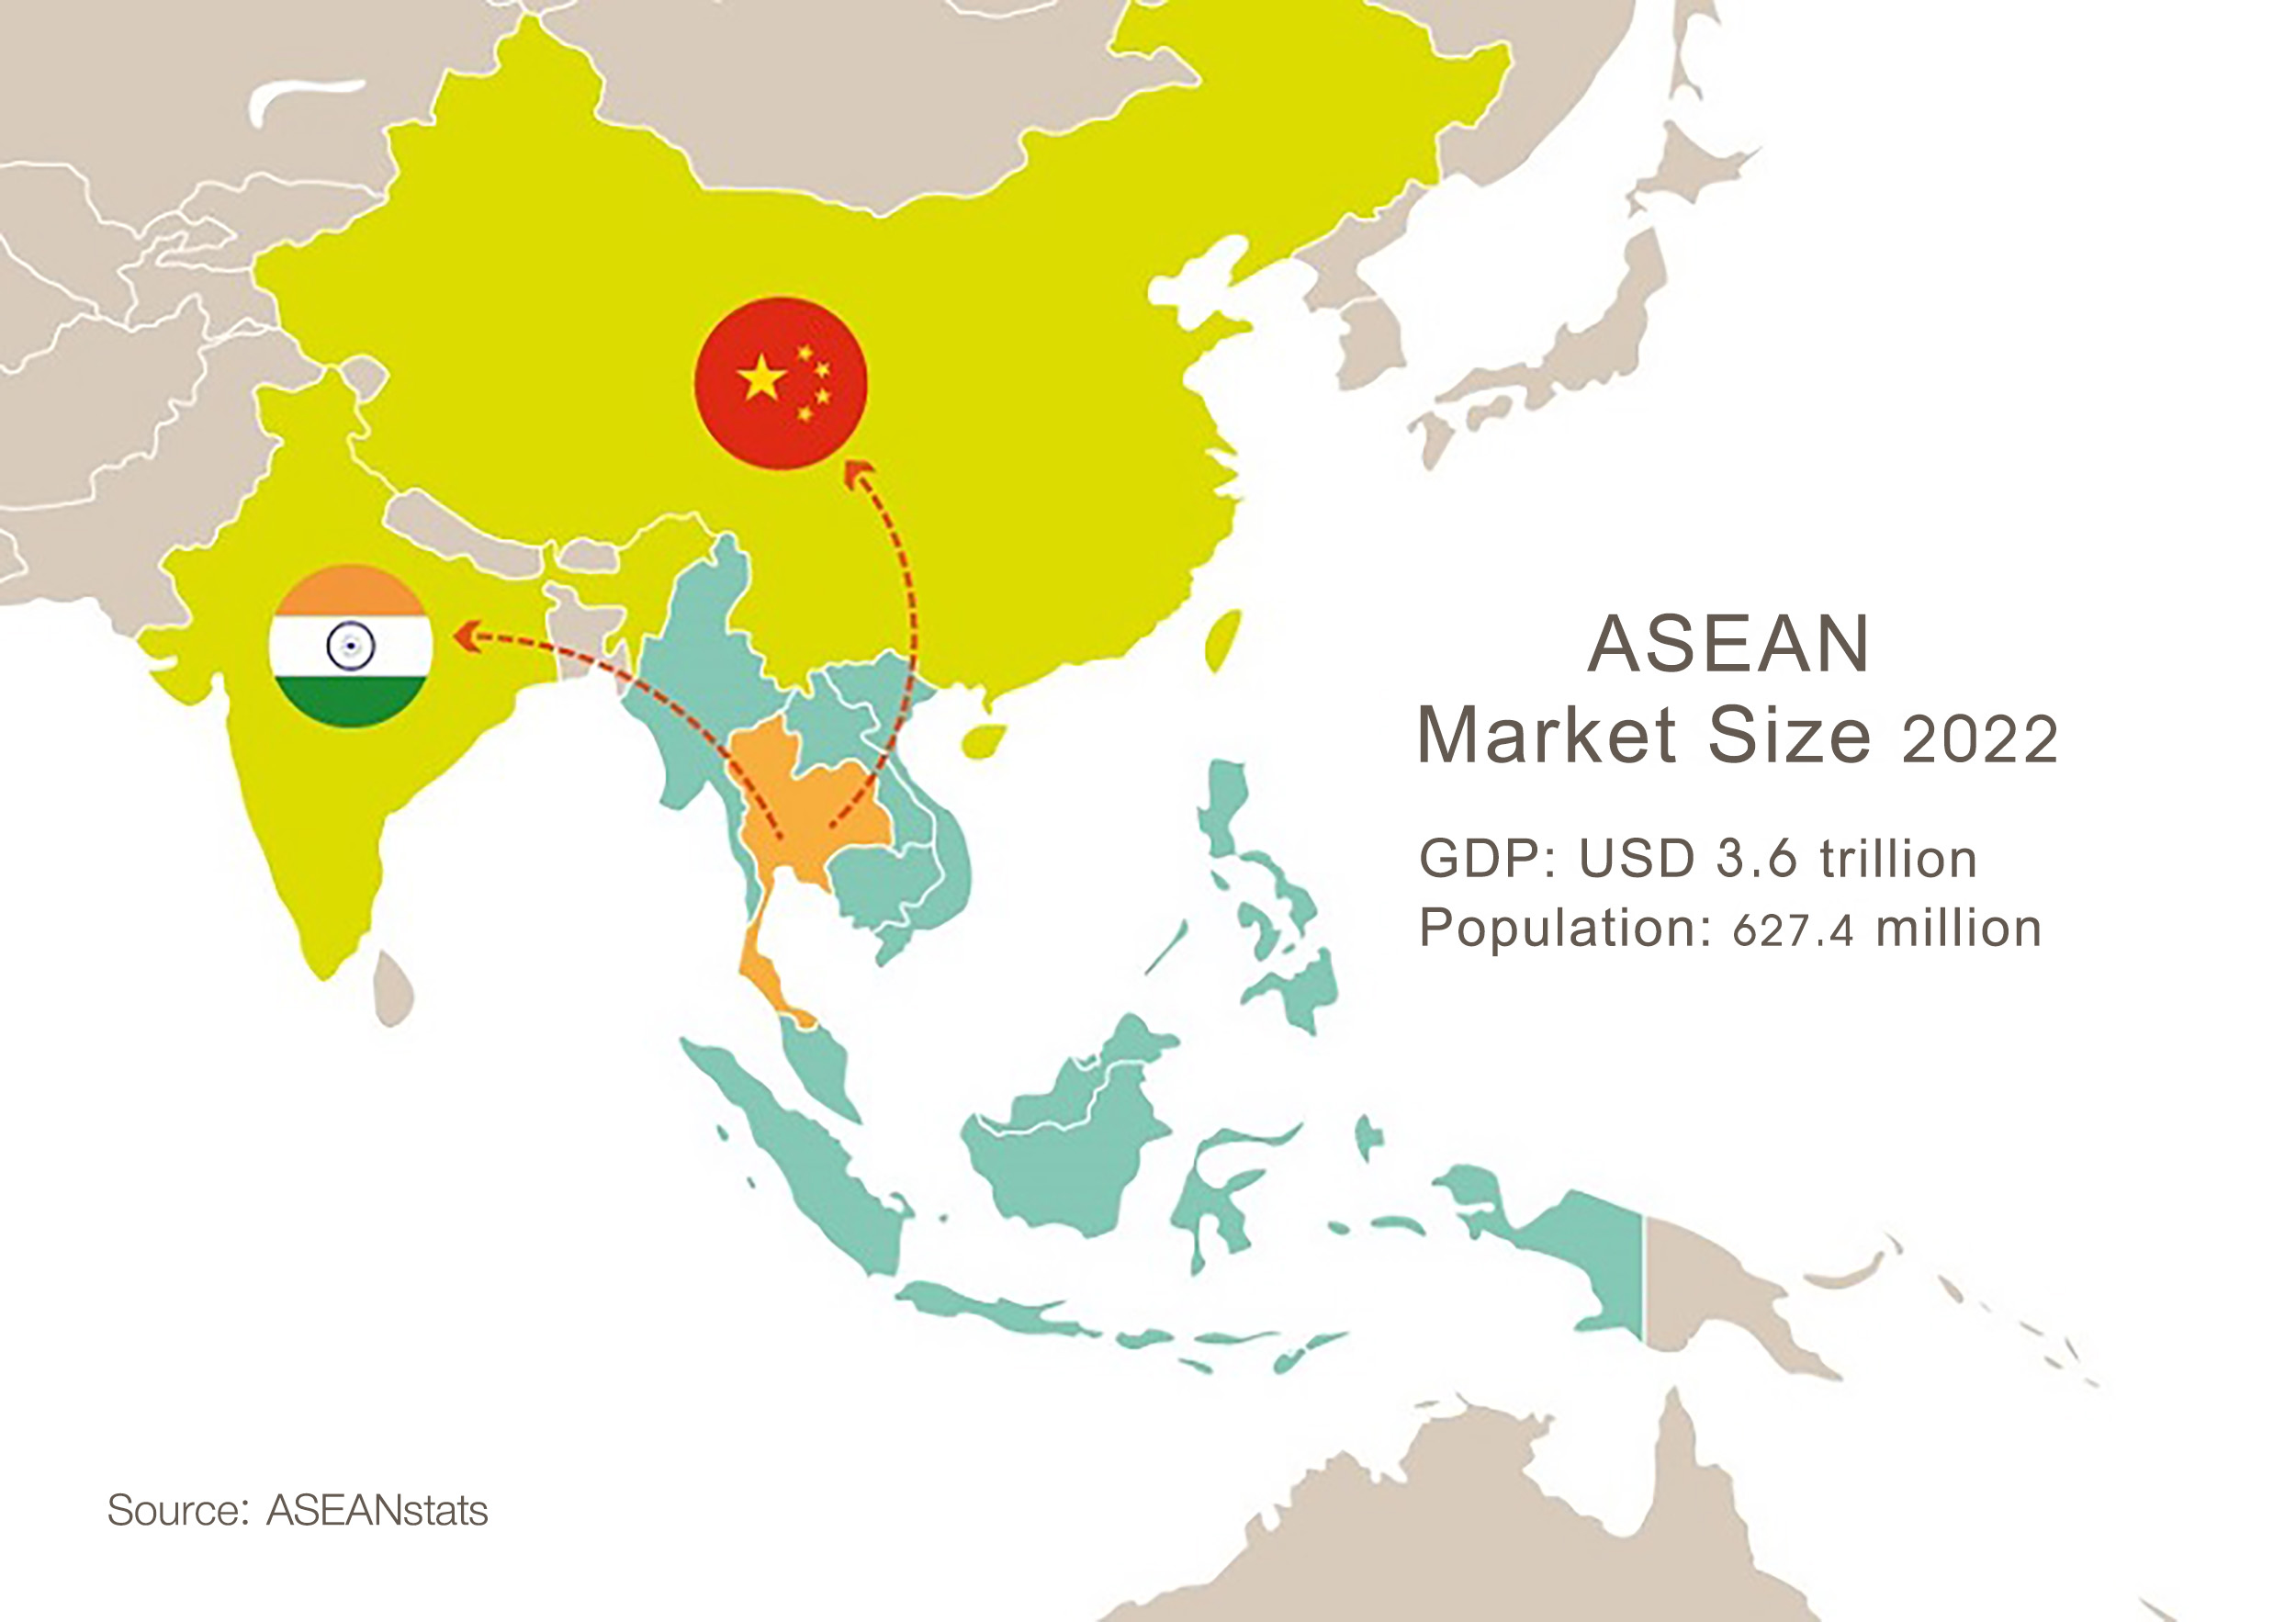 ASEAN Market Size 2022